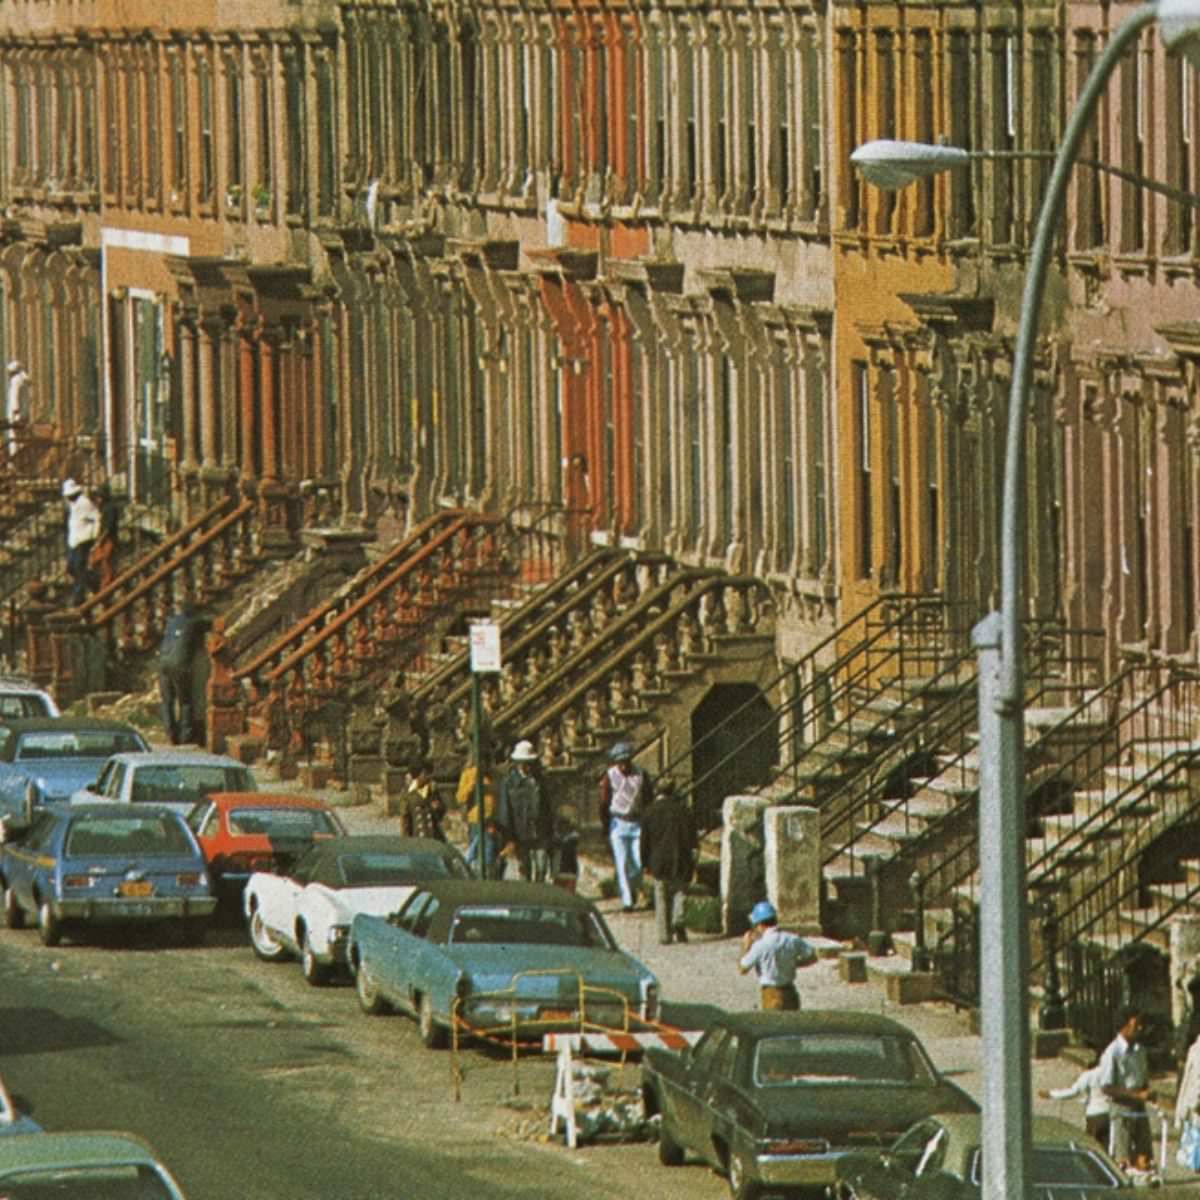 Harlem, photographed by Bernard Herrmann, 1977